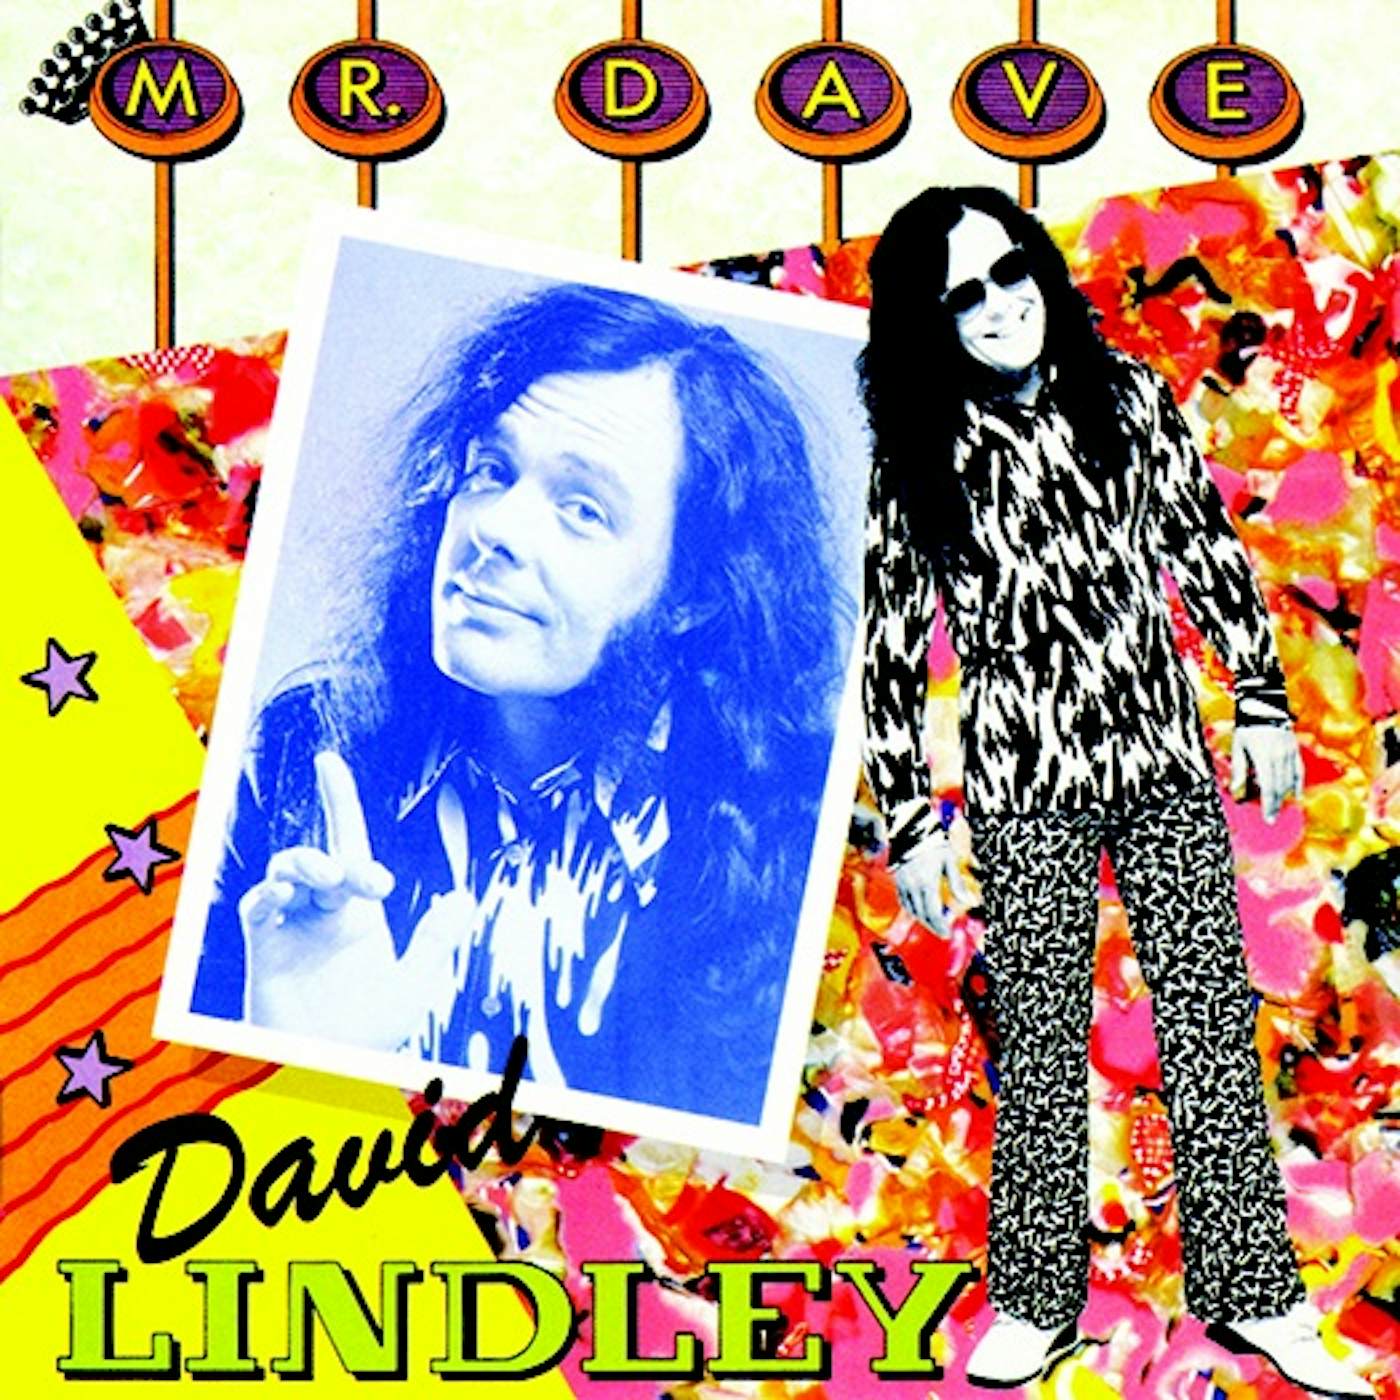 David Lindley MR. DAVE CD